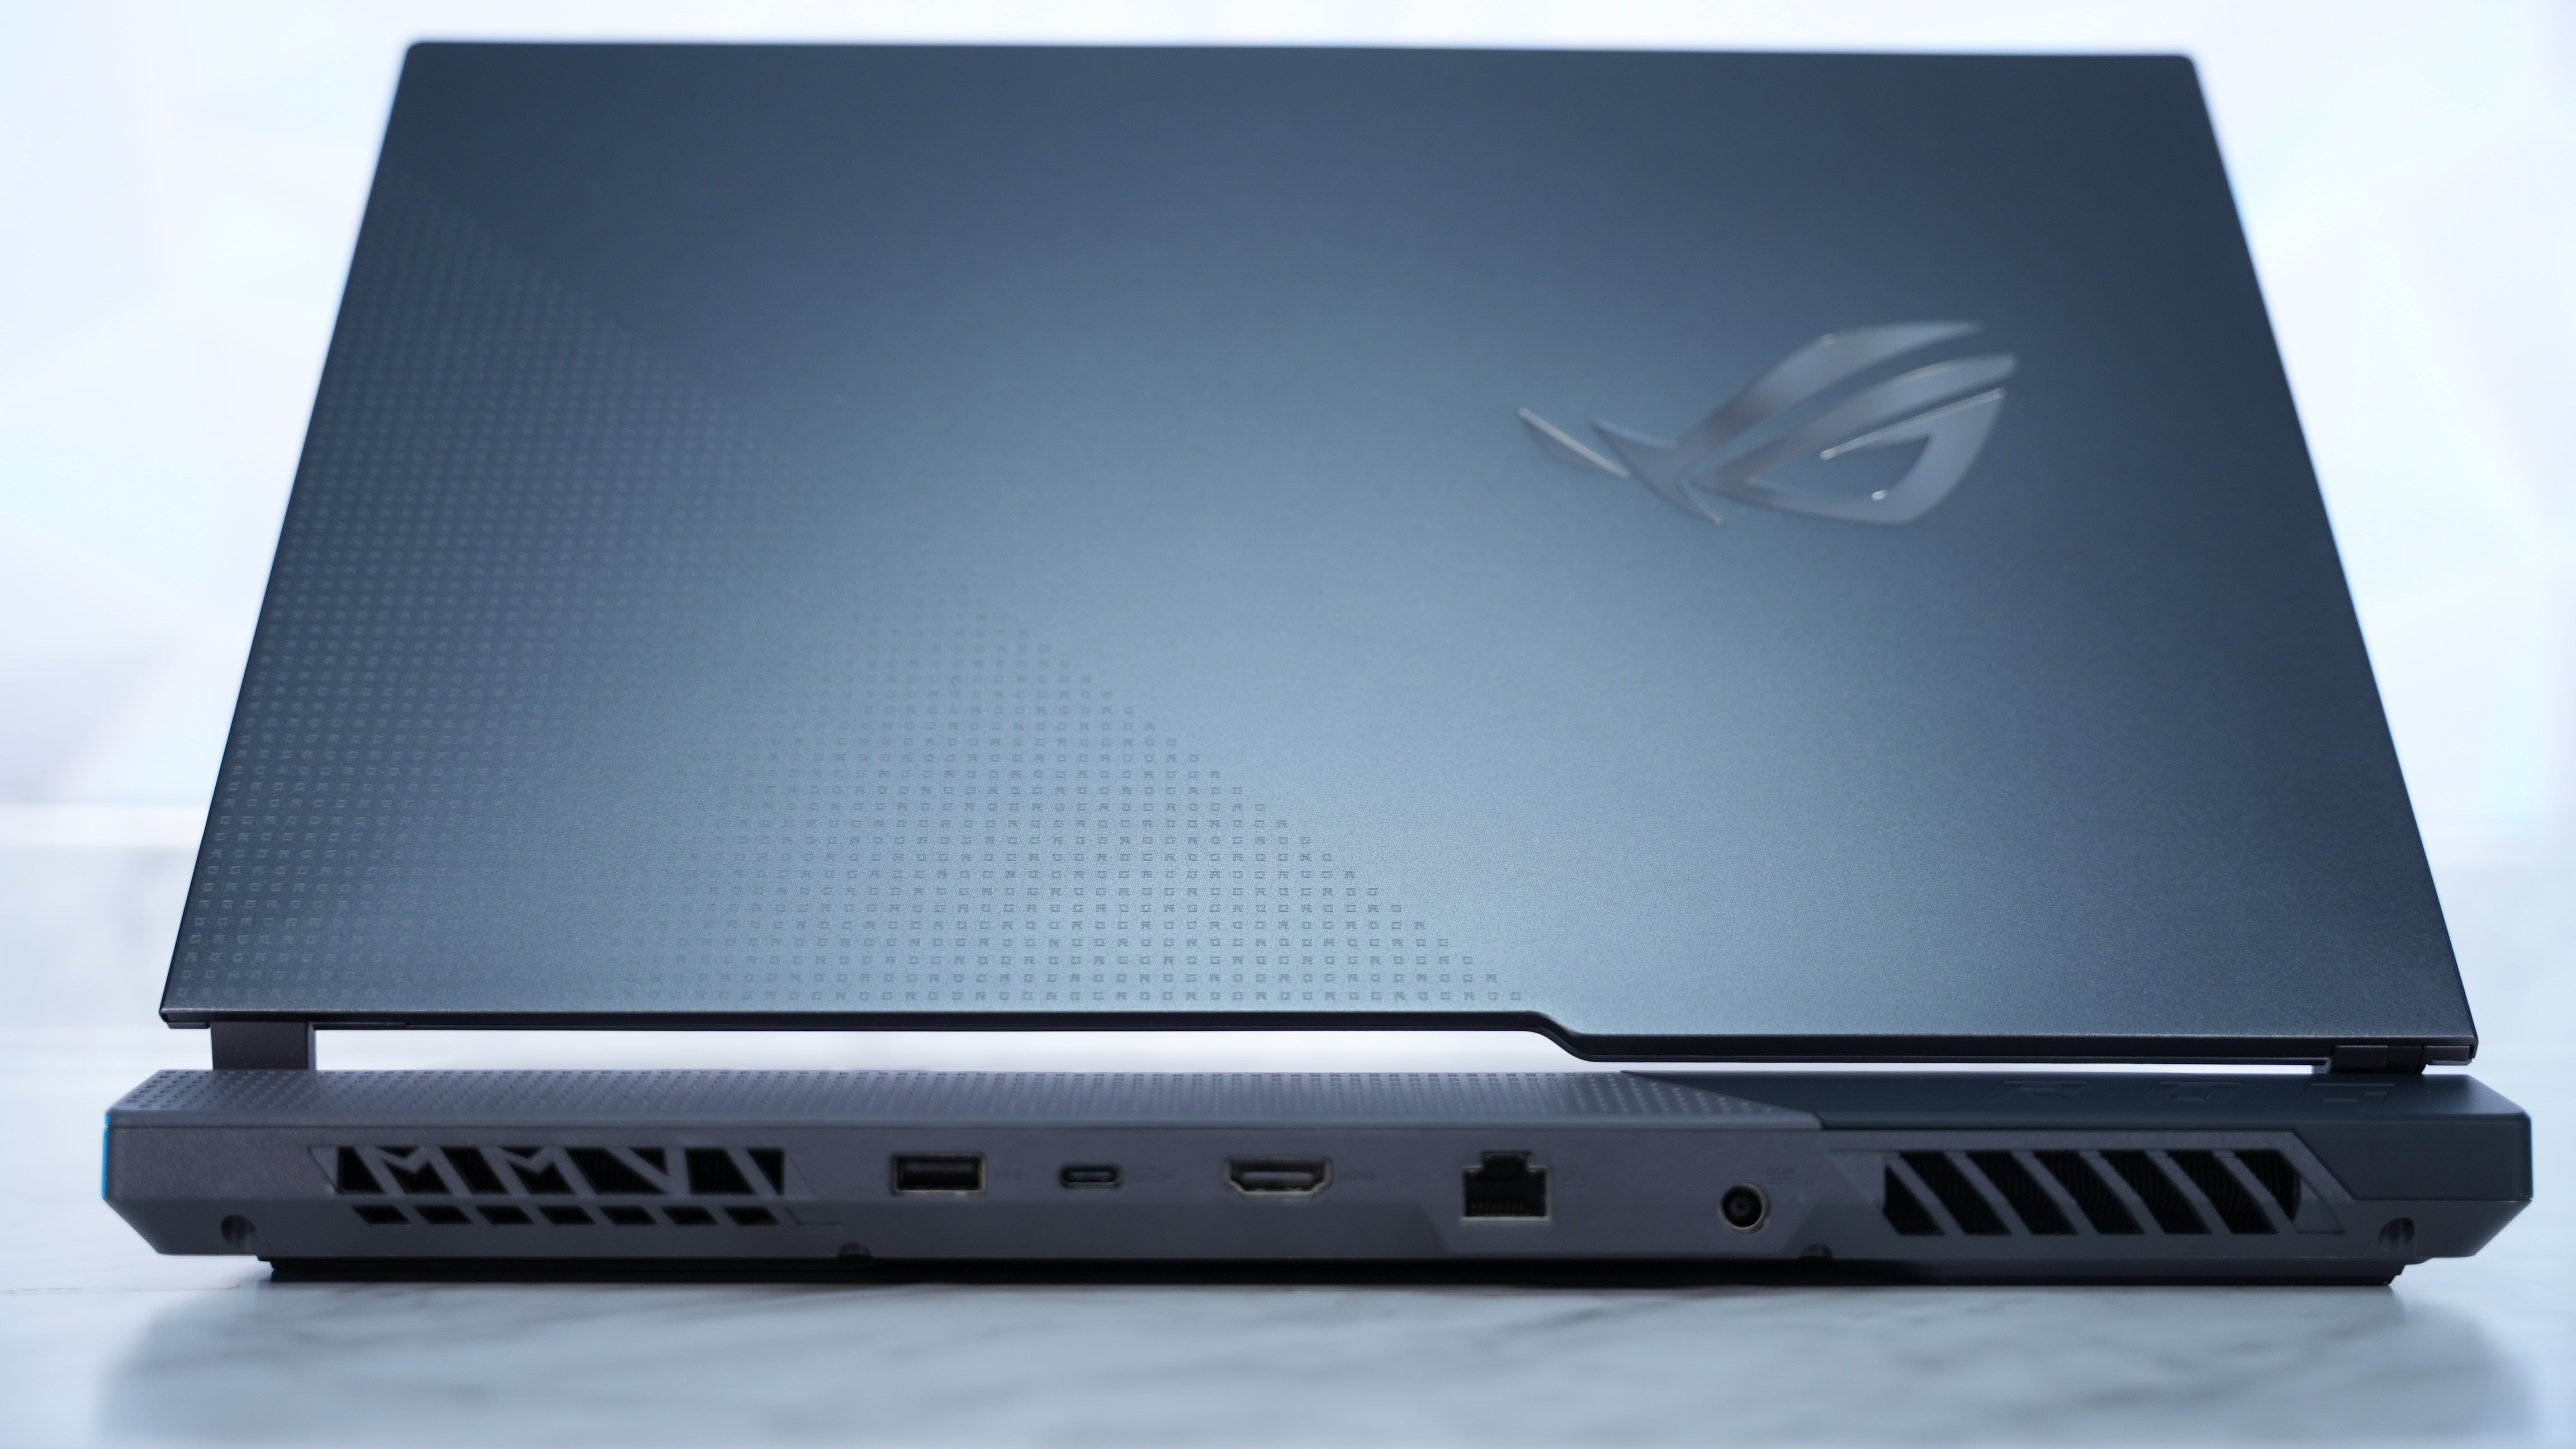 Ryzen 9 5900 HX + RTX 3060 Gaming Laptop (In Stock)